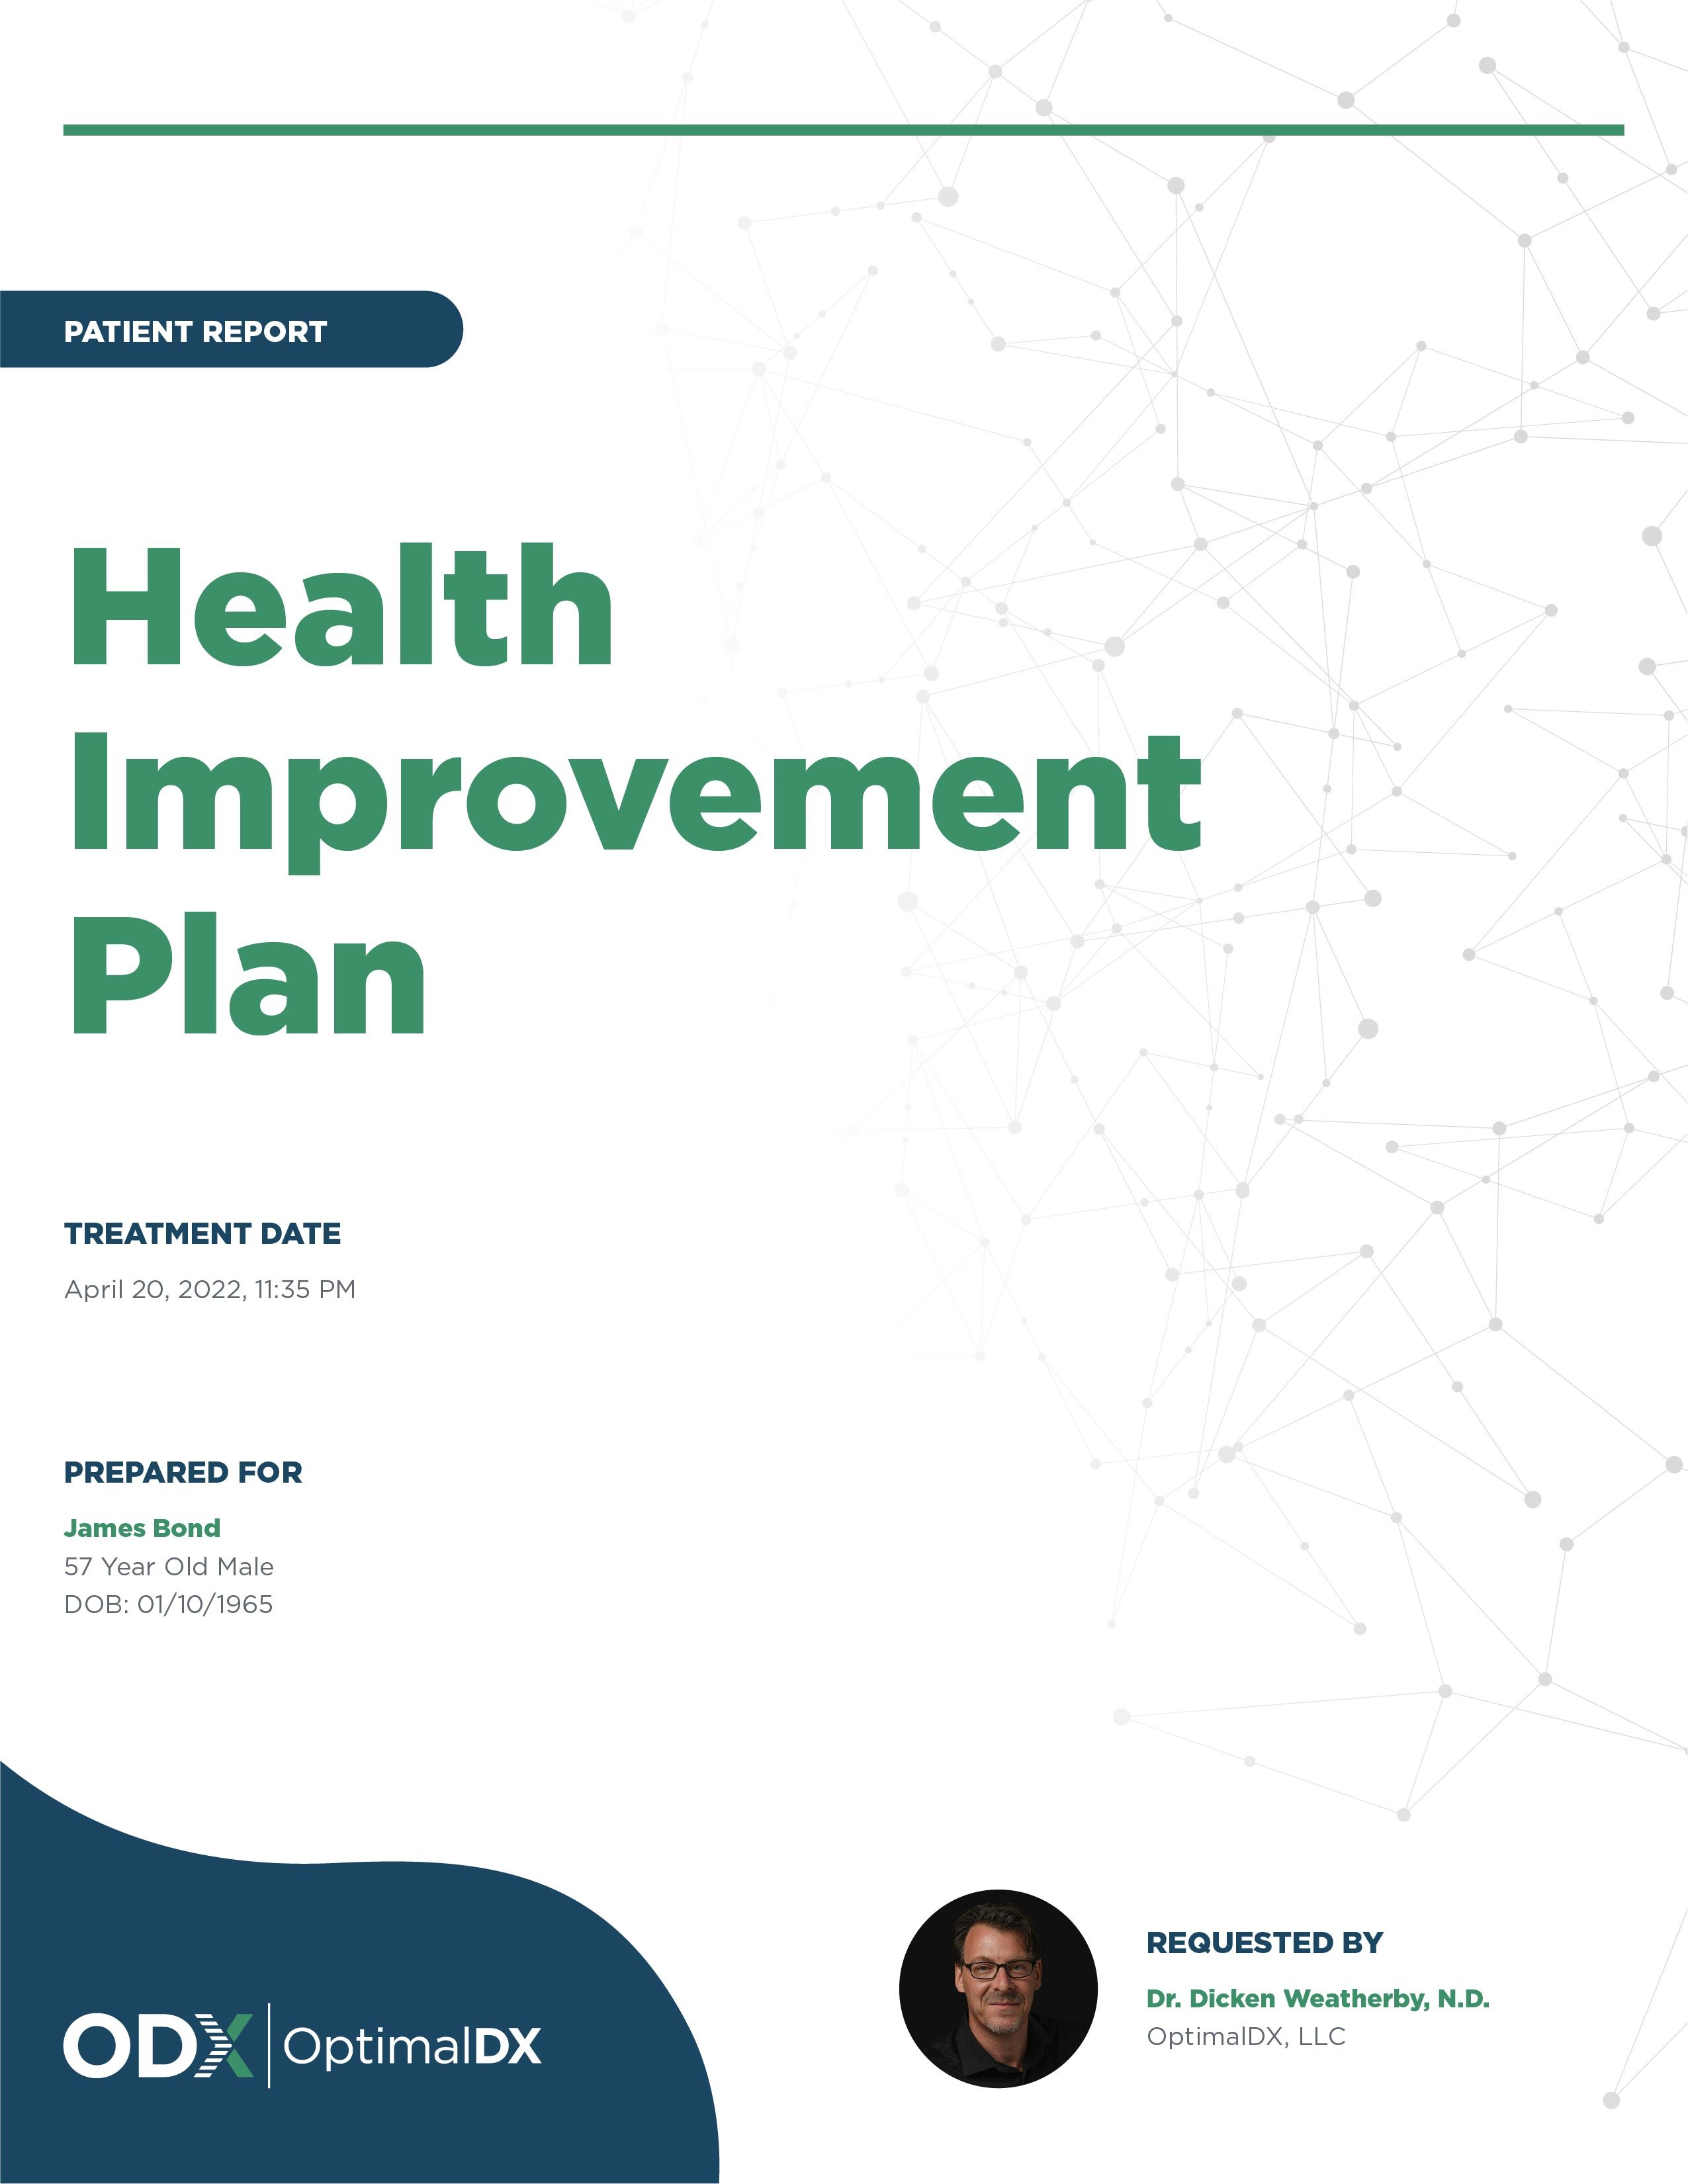 Health Improvement Plan Report Images_HIP V1.3